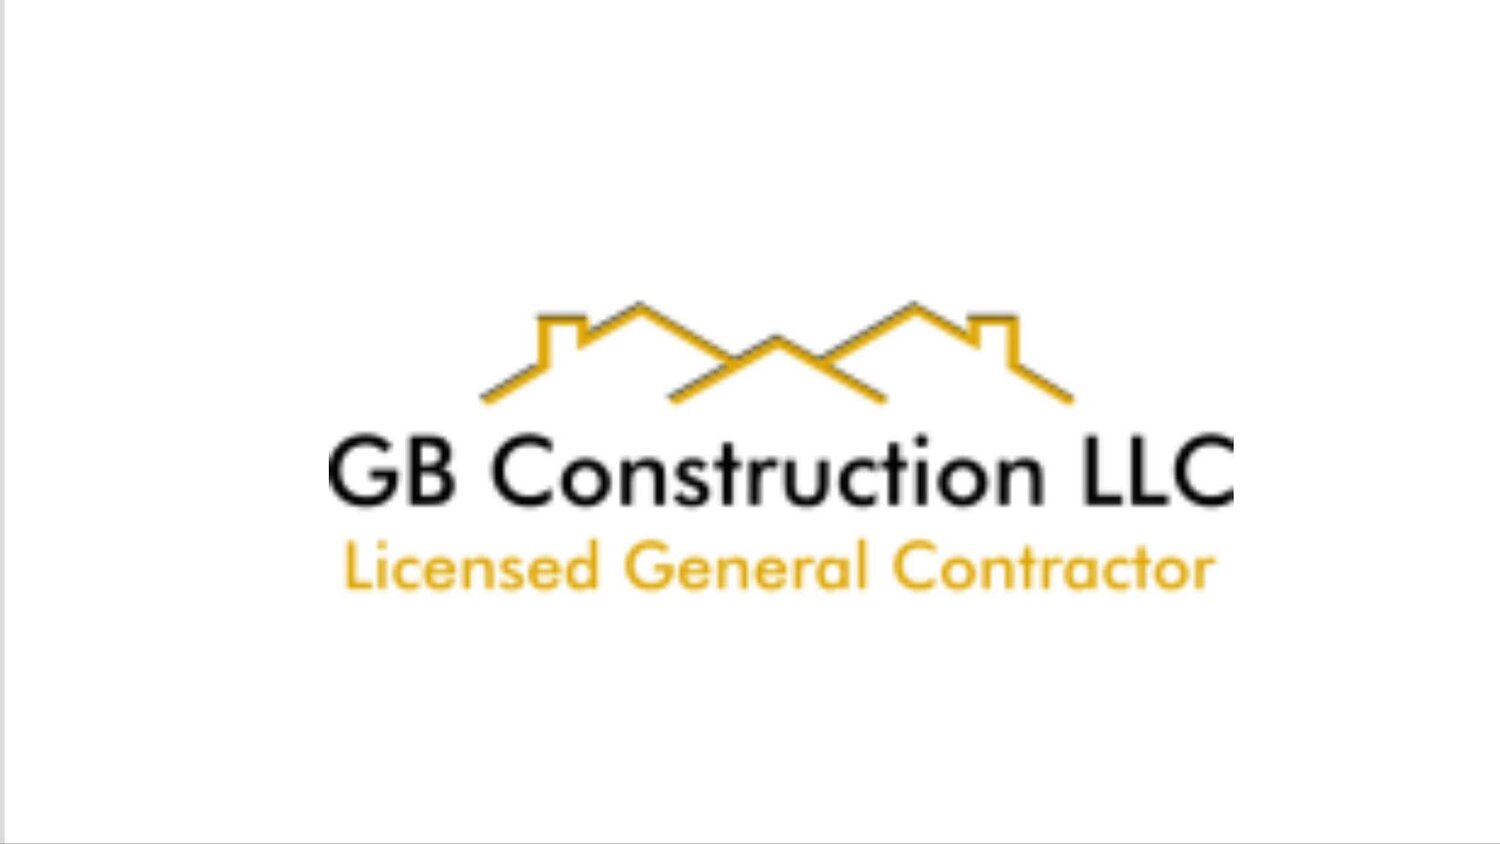 GB Construction LLC